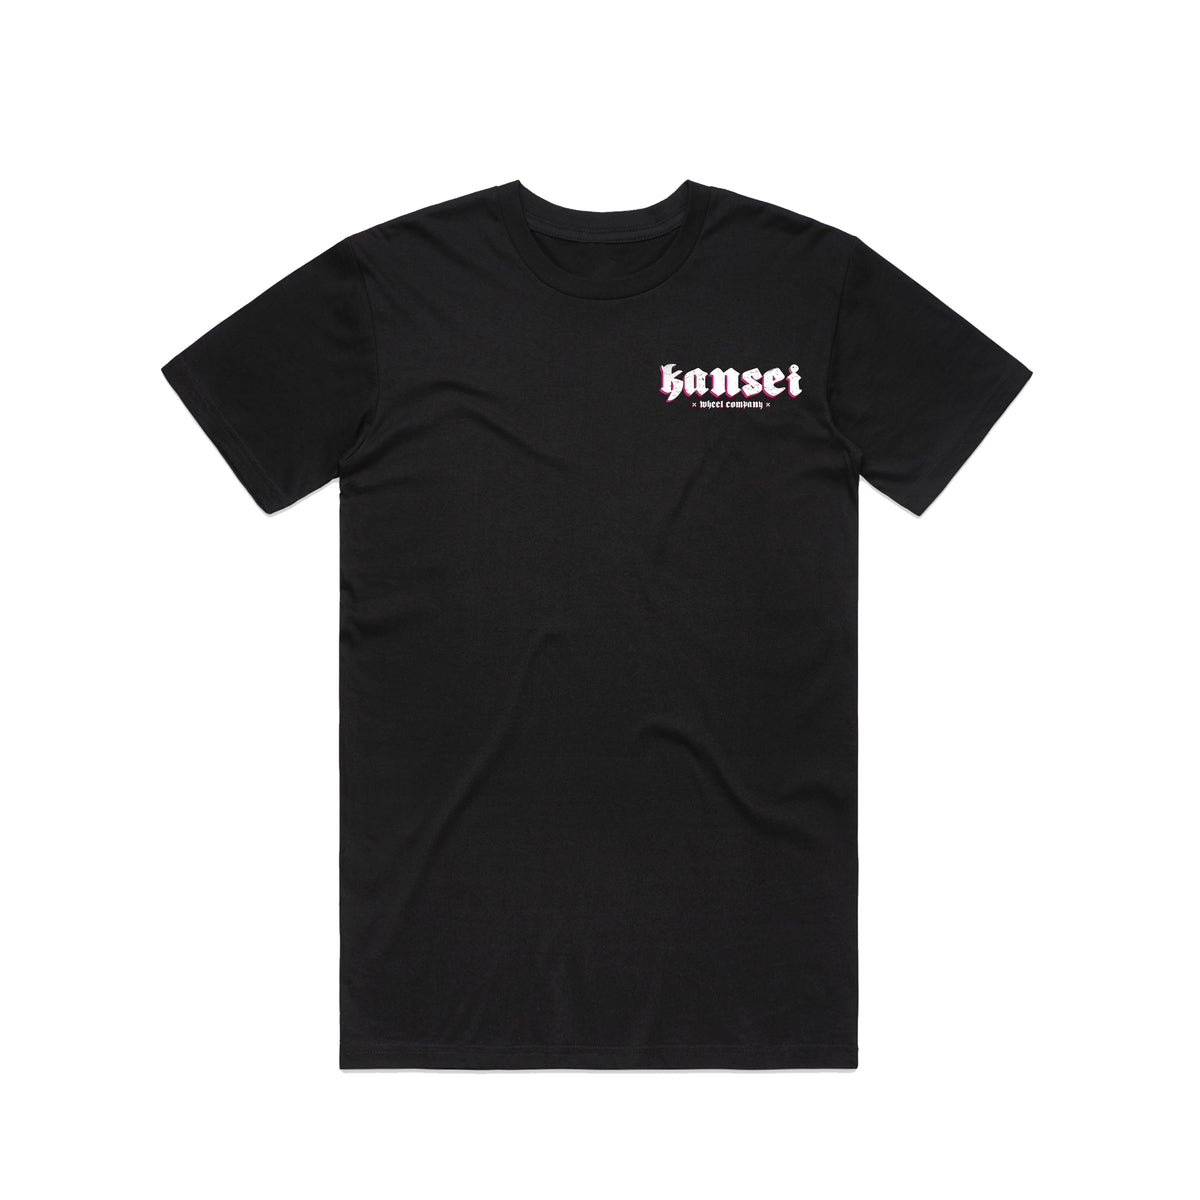 Kansei Reaper Shirt